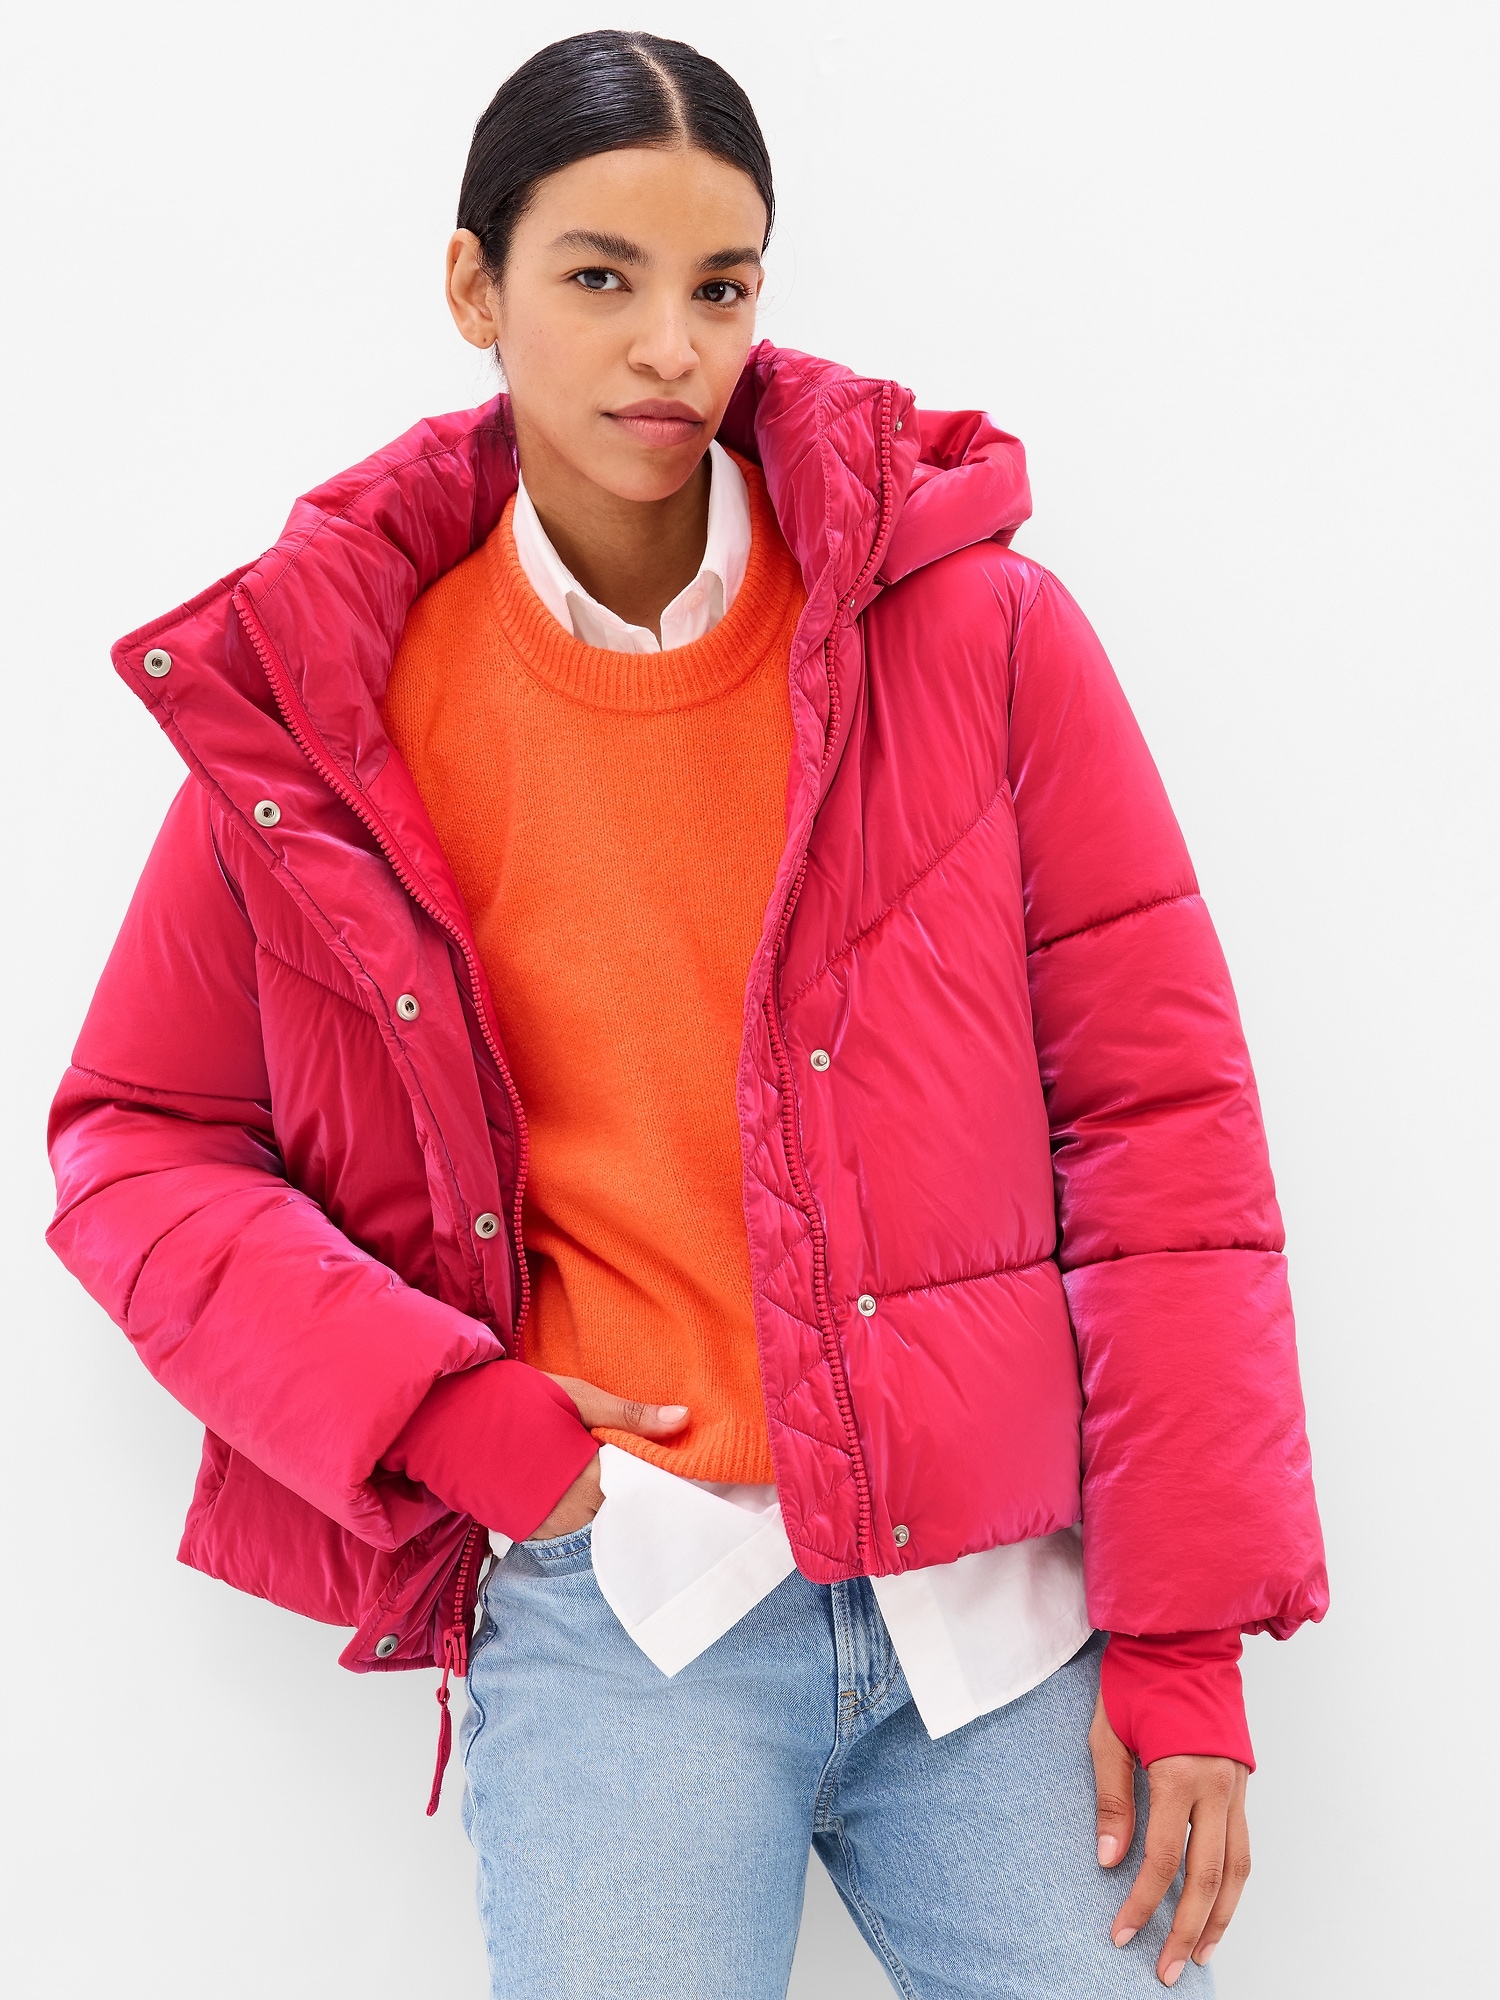 Gap Pink Puffer Jacket | sites.unimi.it